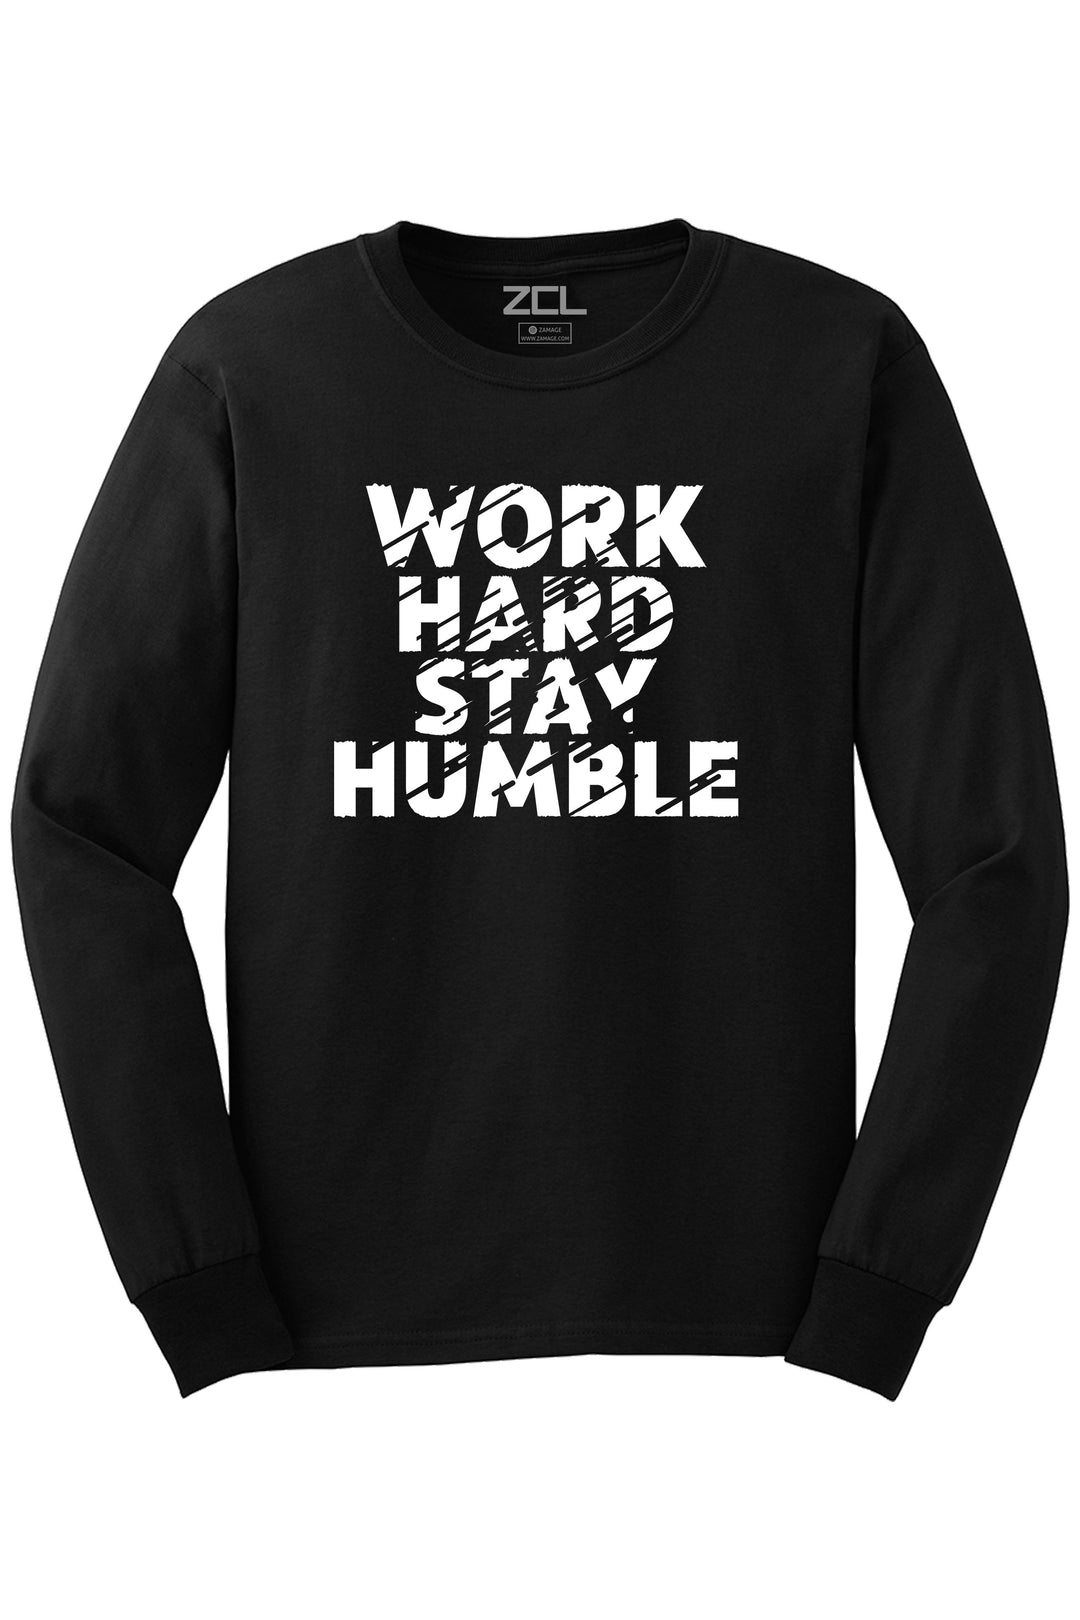 Work Hard Stay Humble Long Sleeve Tee (White Logo) - Zamage